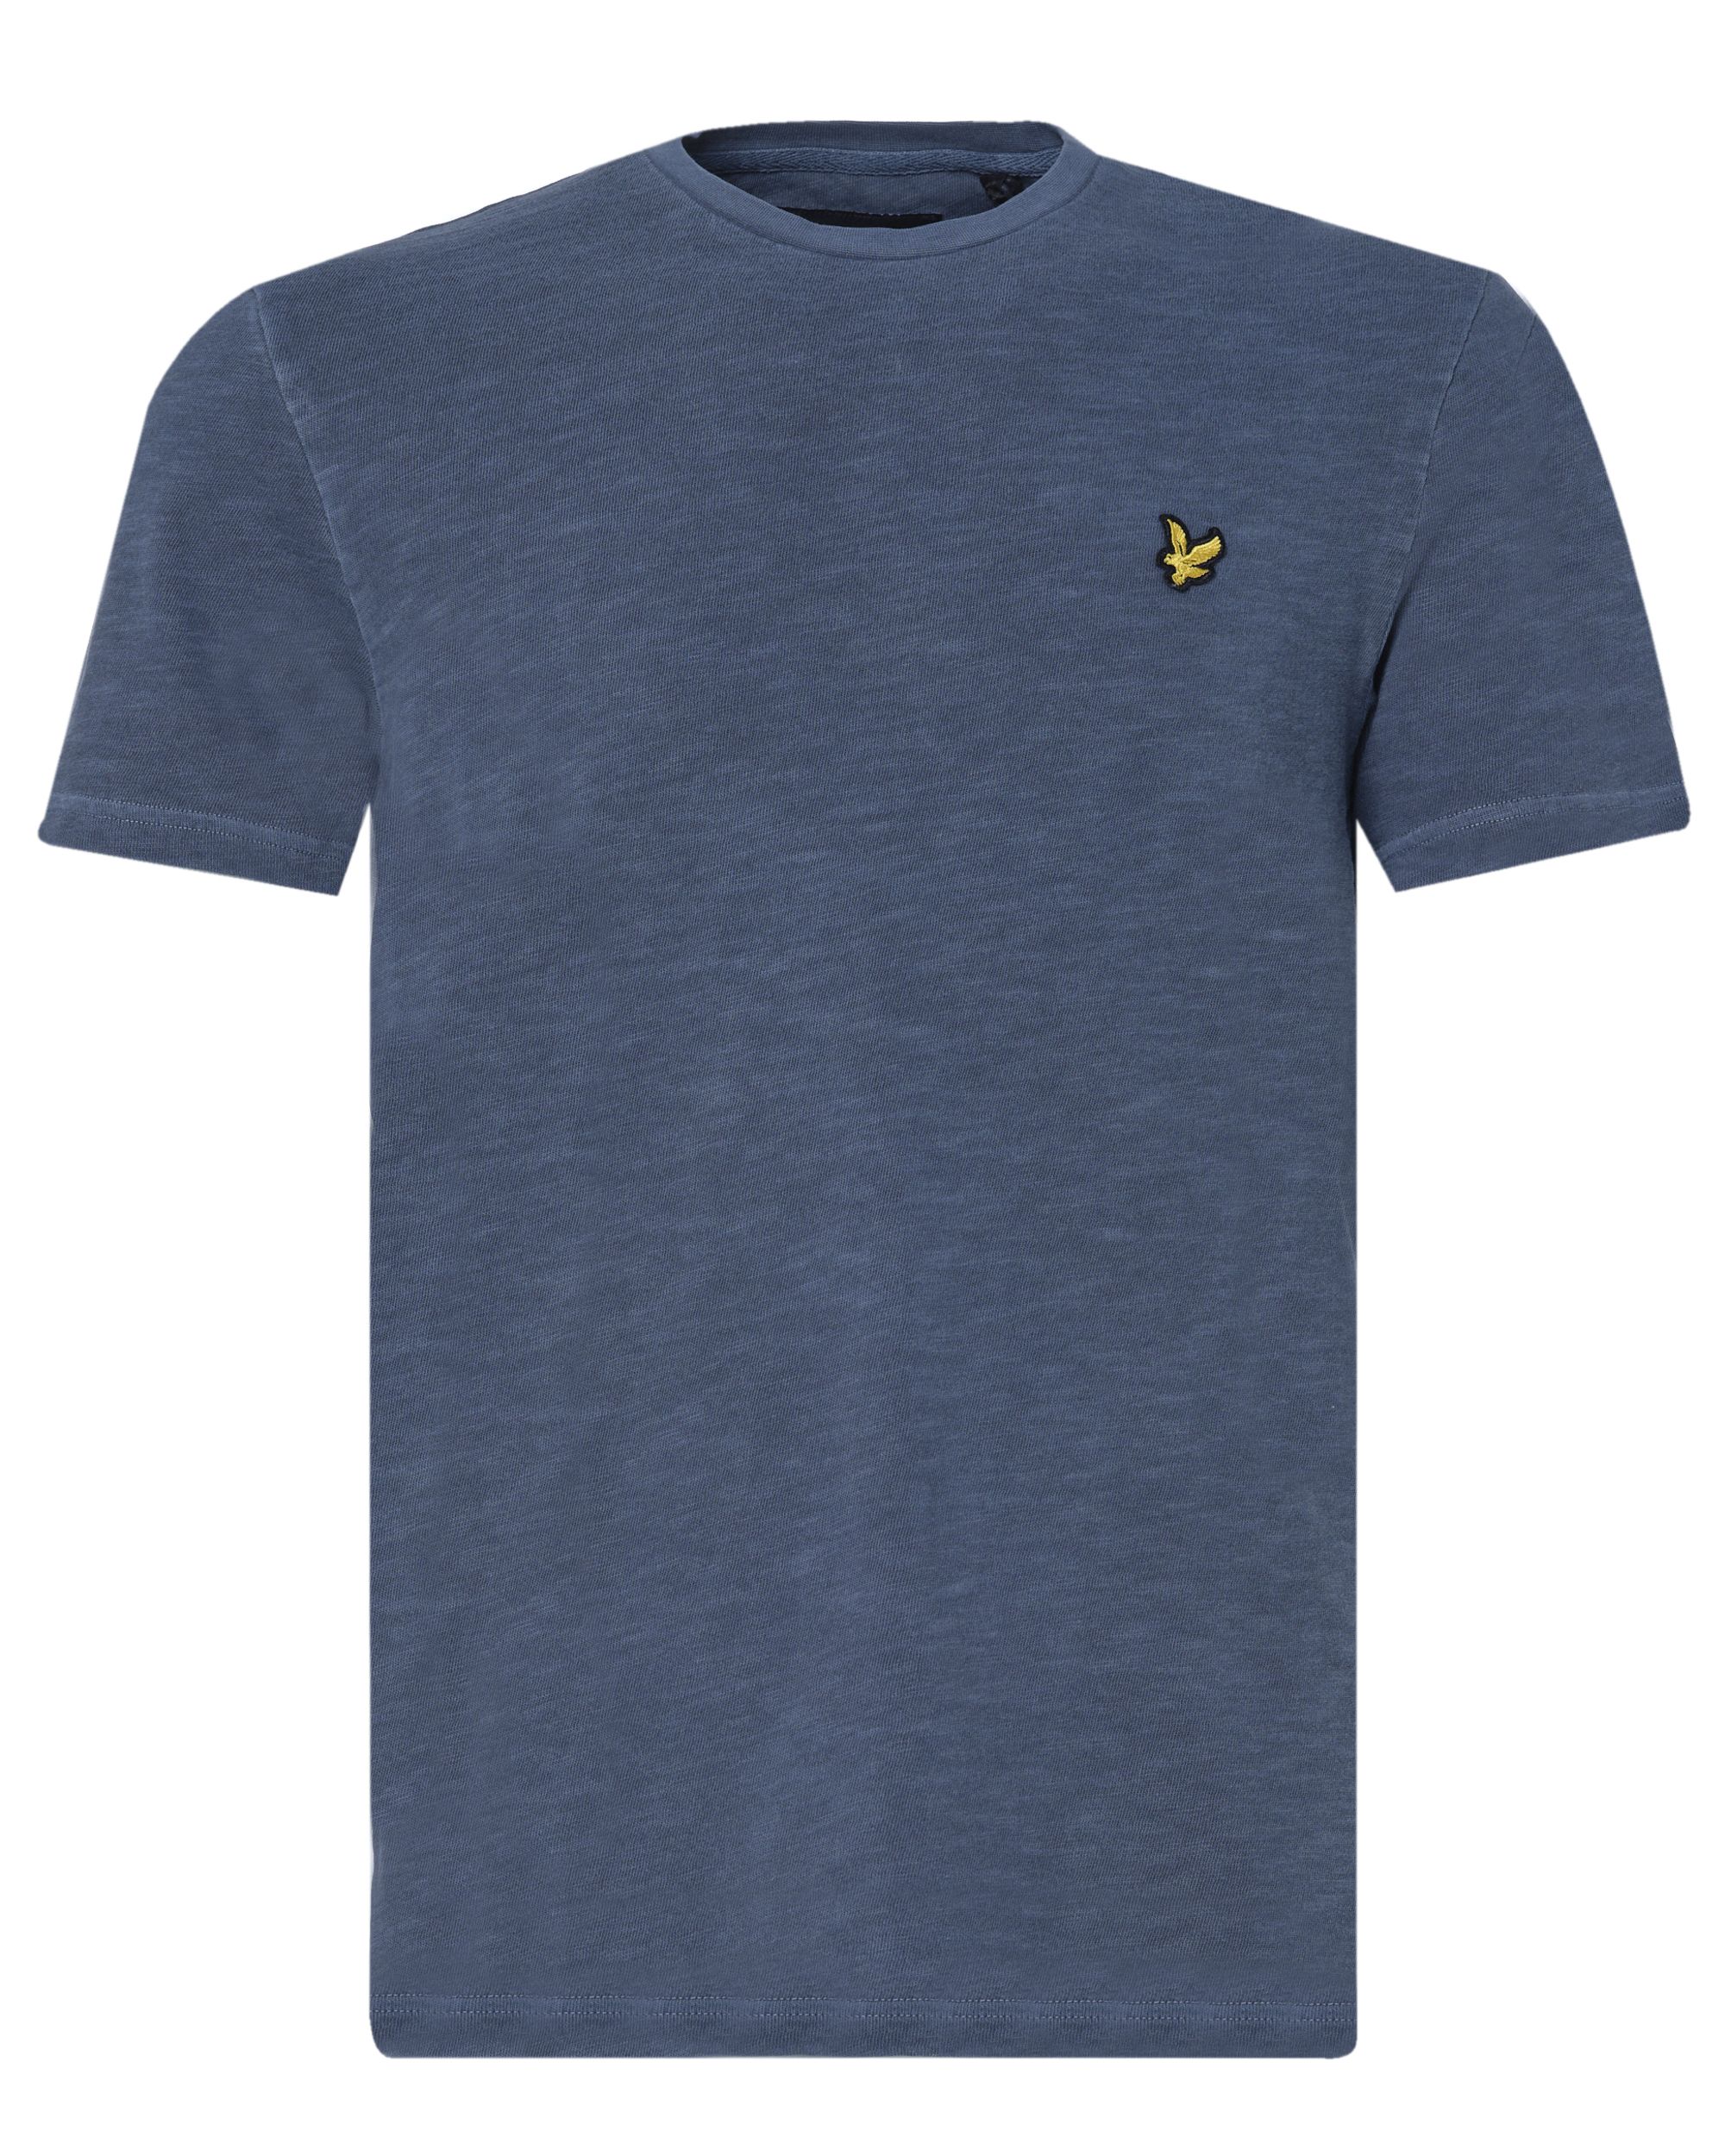 Lyle & Scott T-shirt KM Donker blauw 078879-002-L